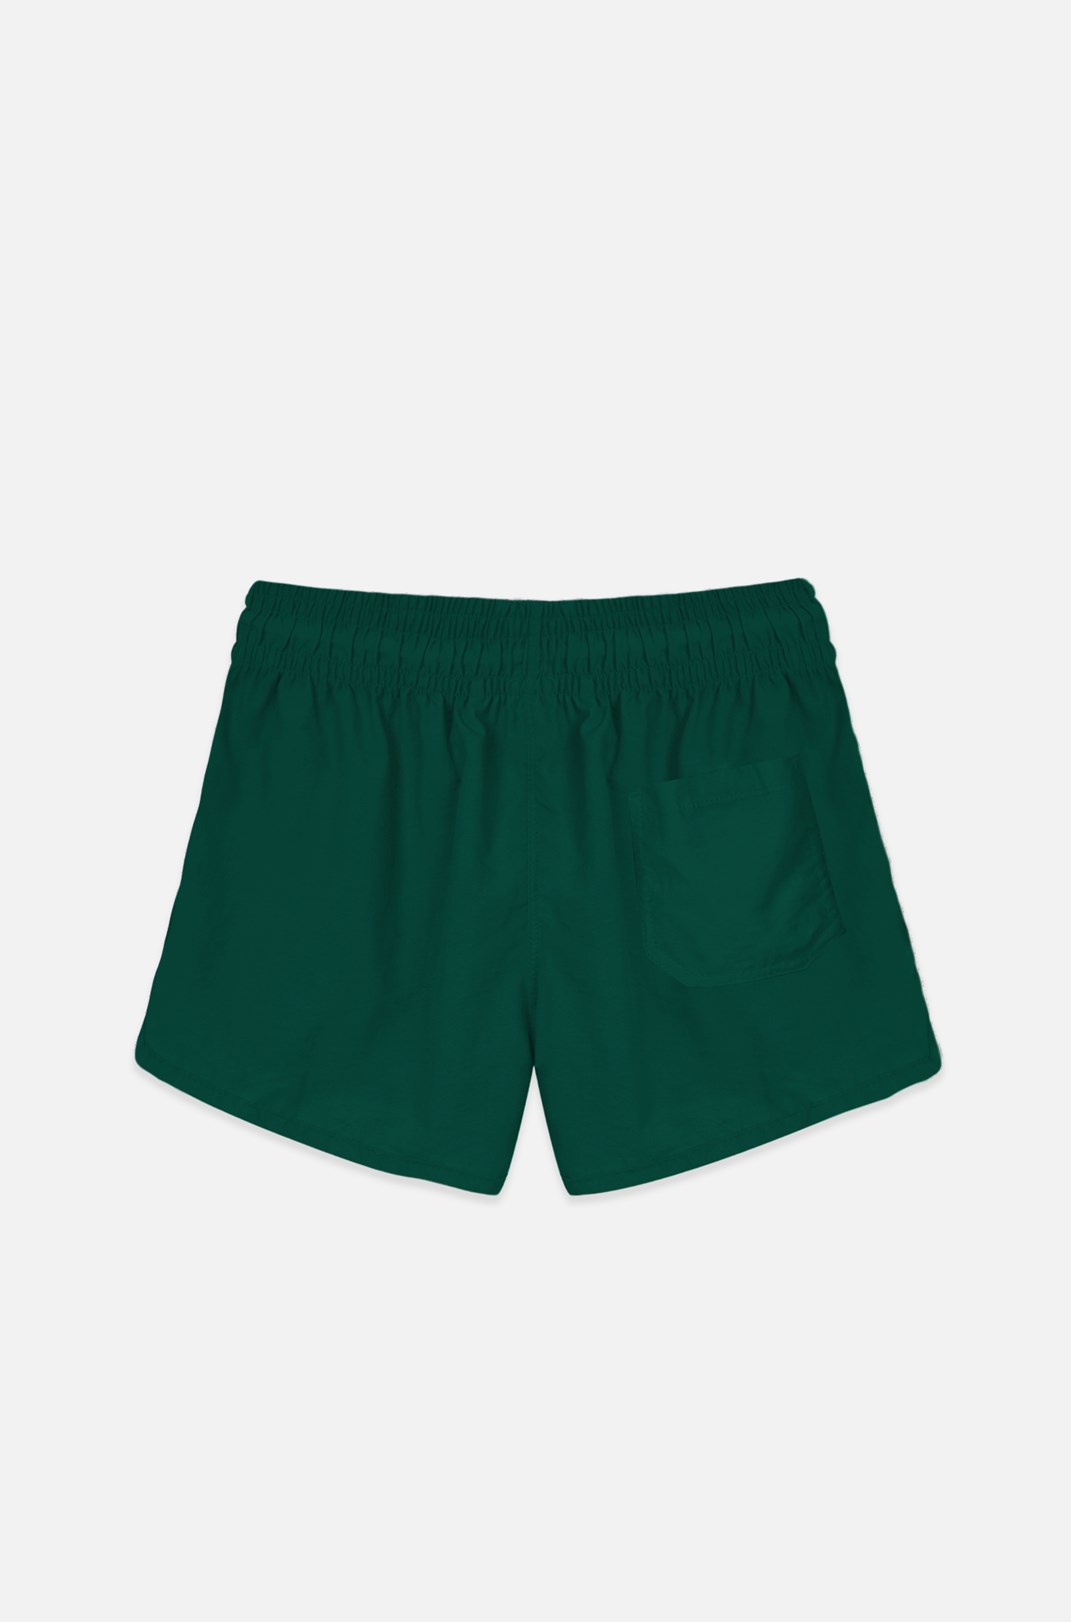 Shorts Approve Verde Escuro